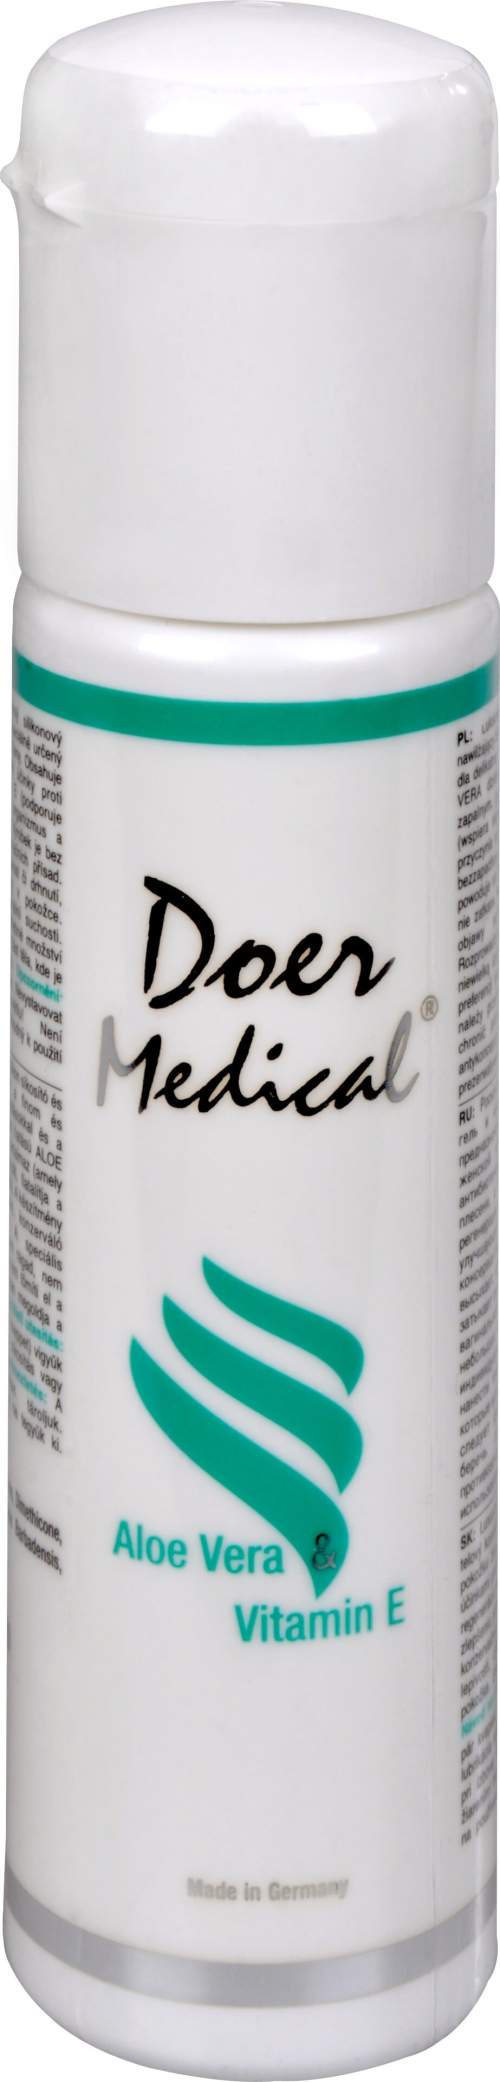 Megasol Doer Medical Aloe Vera 100ml